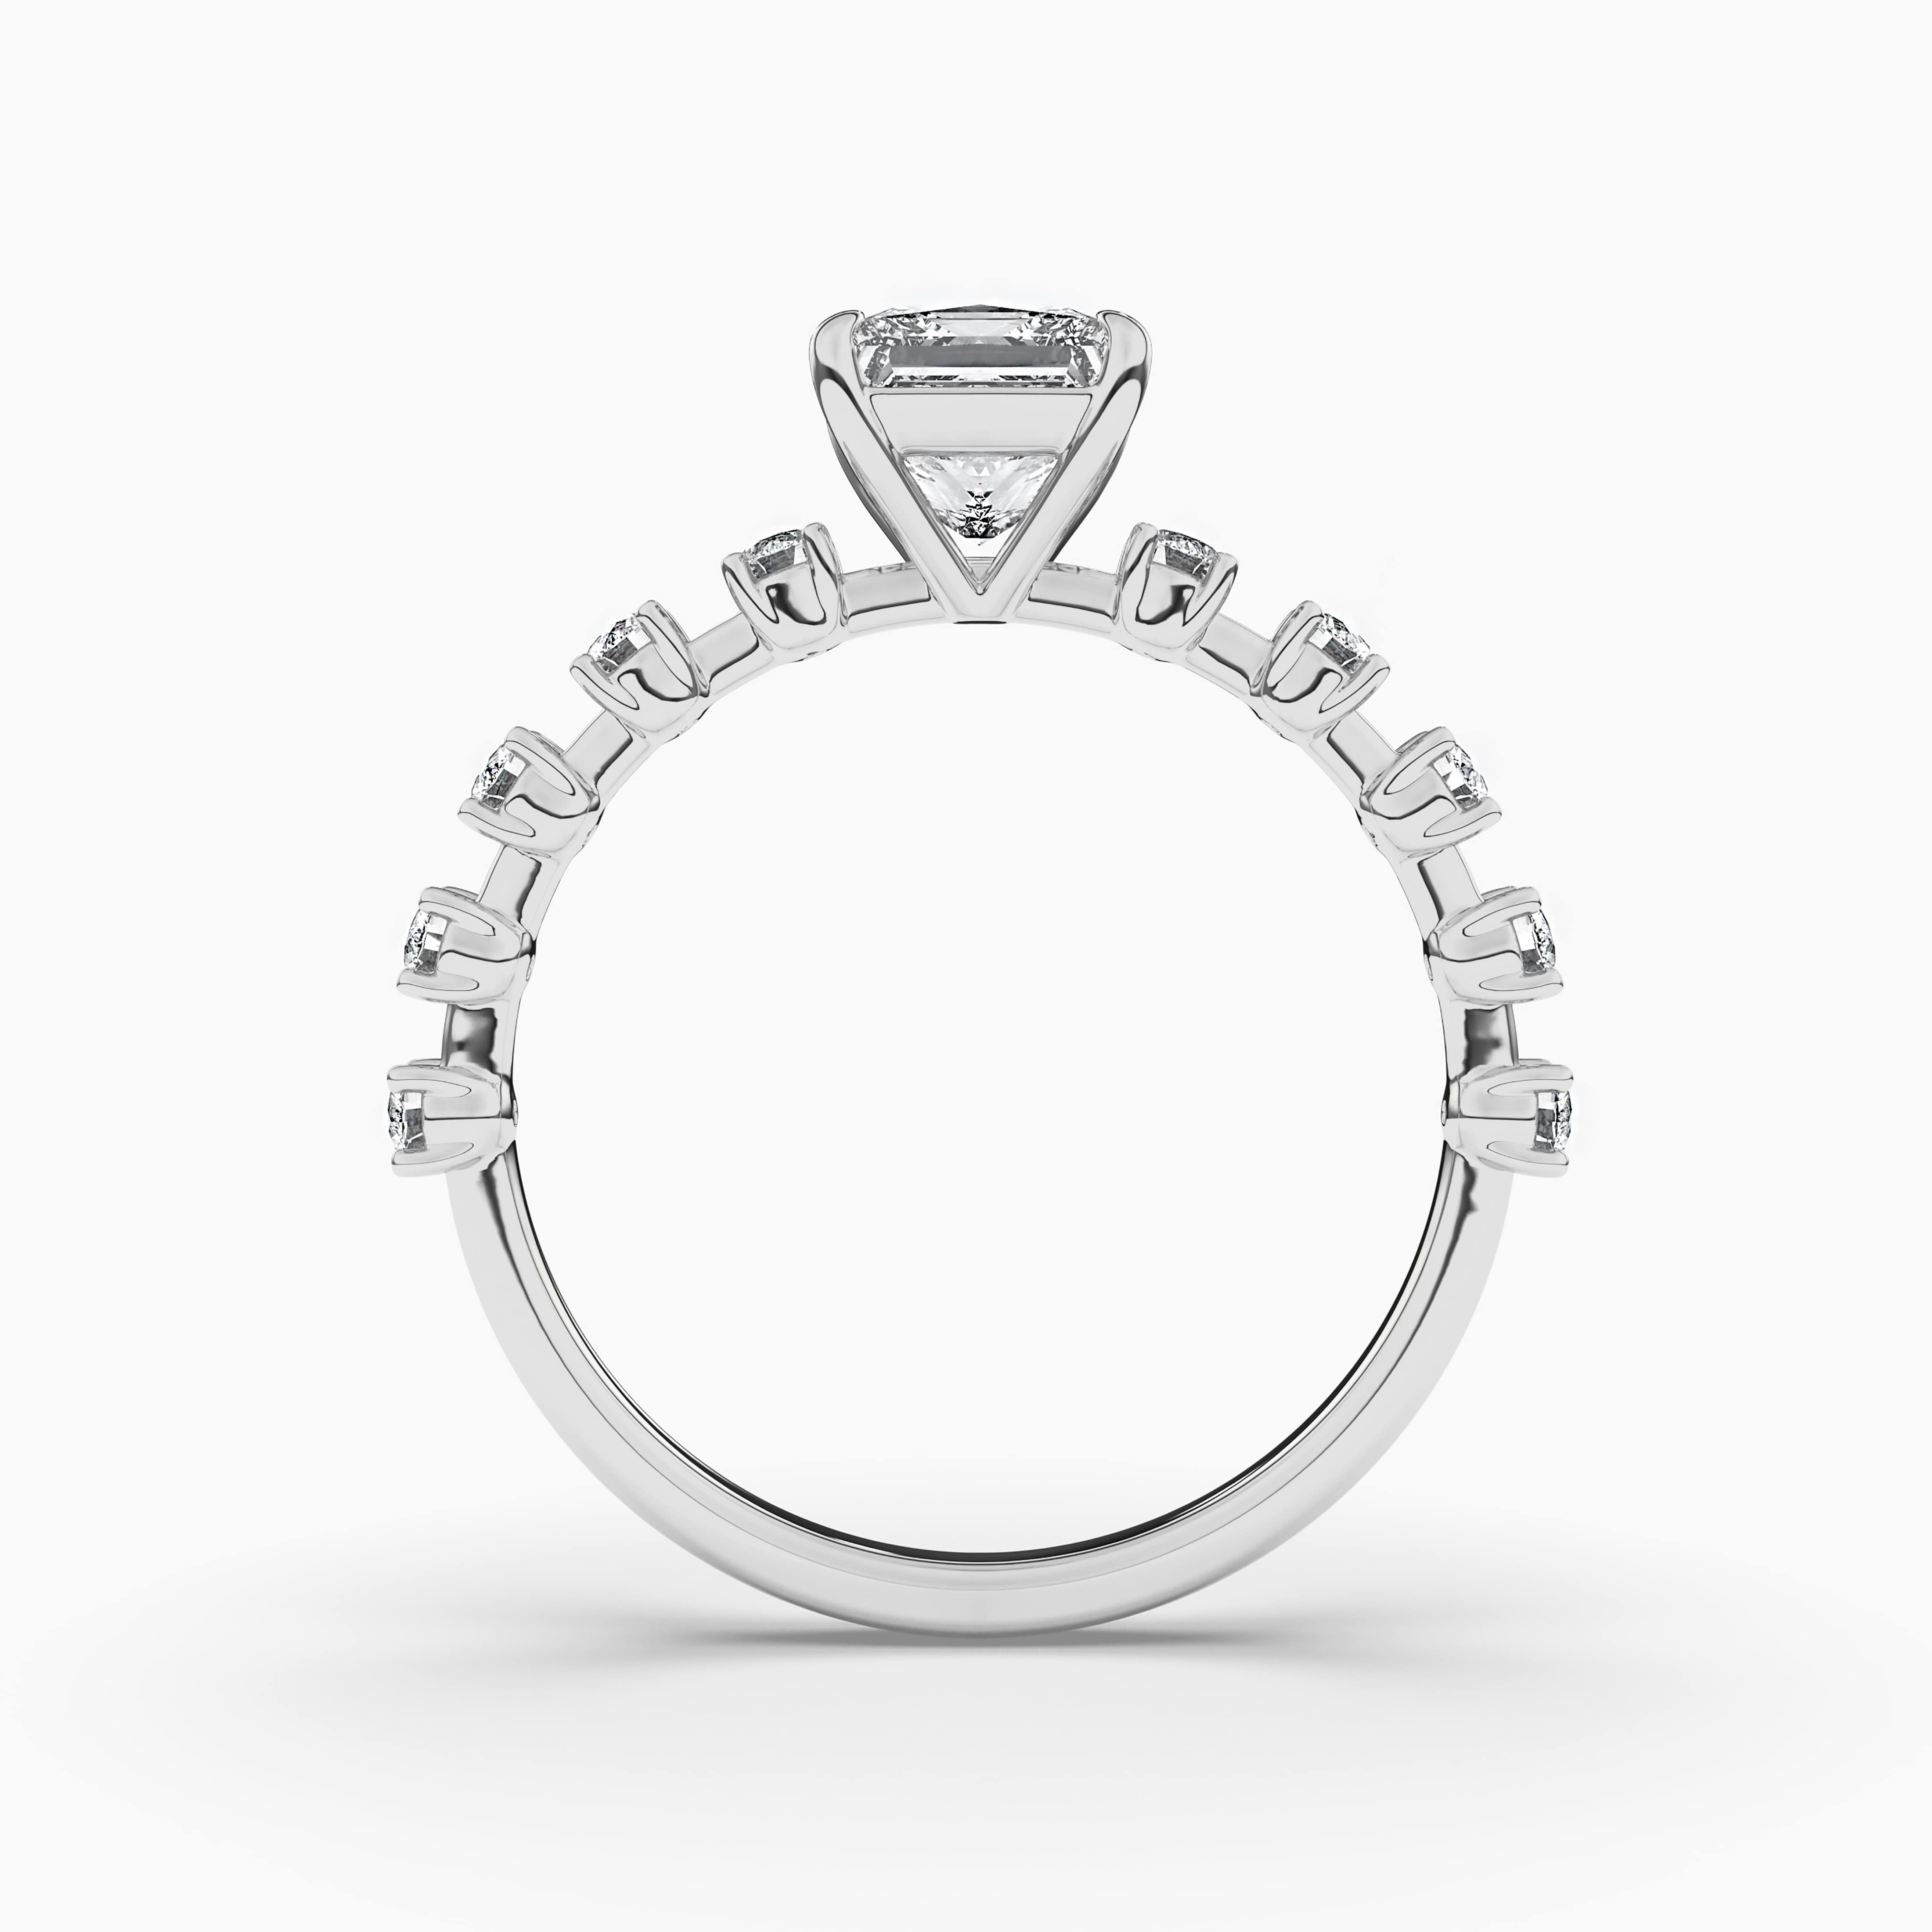 Square diamond wedding ring